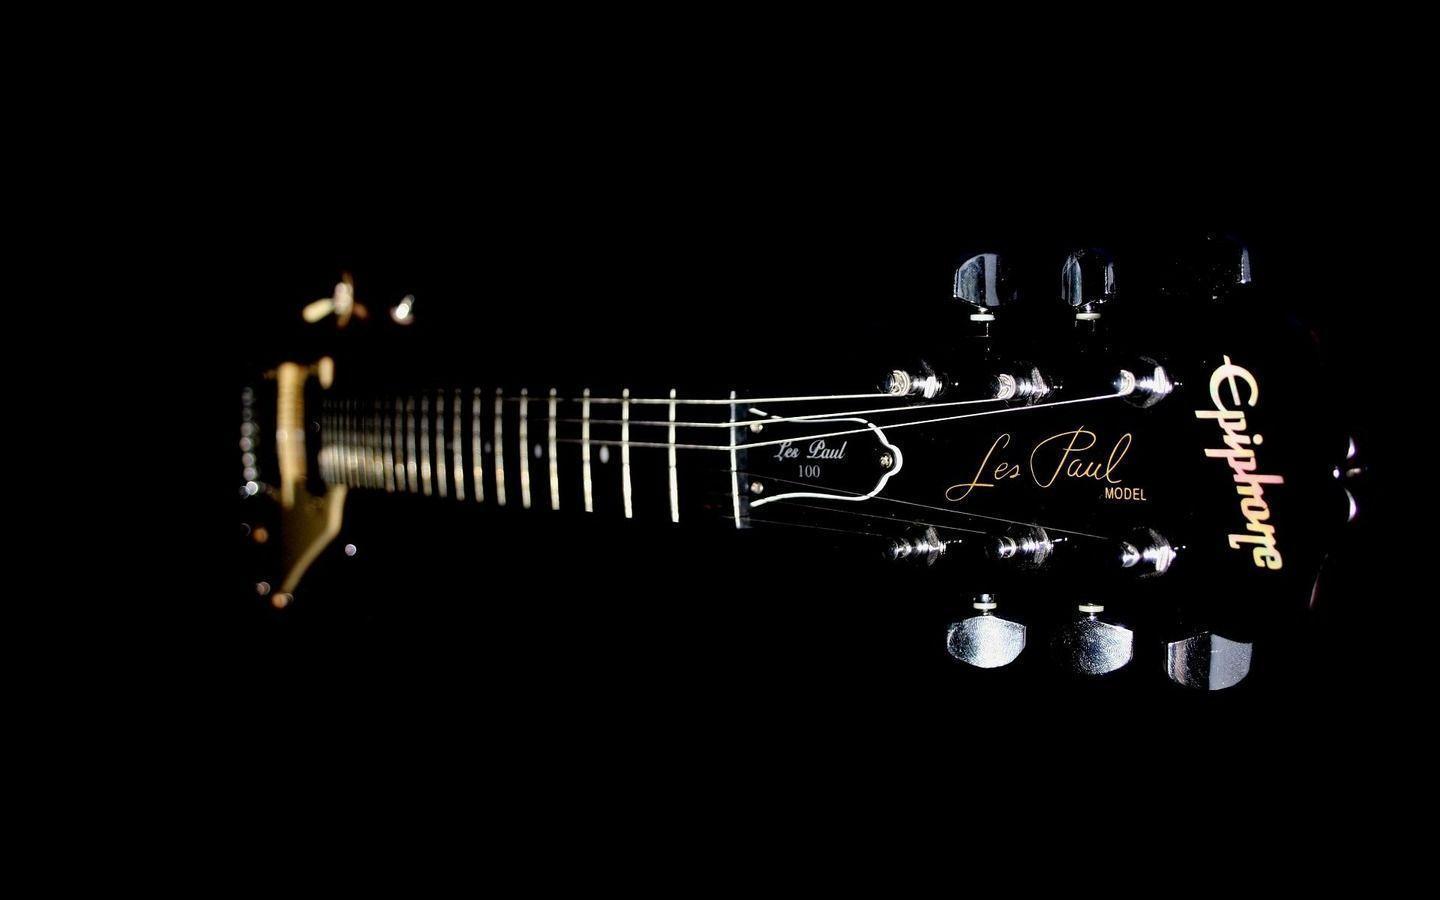 Les Paul Guitar Model